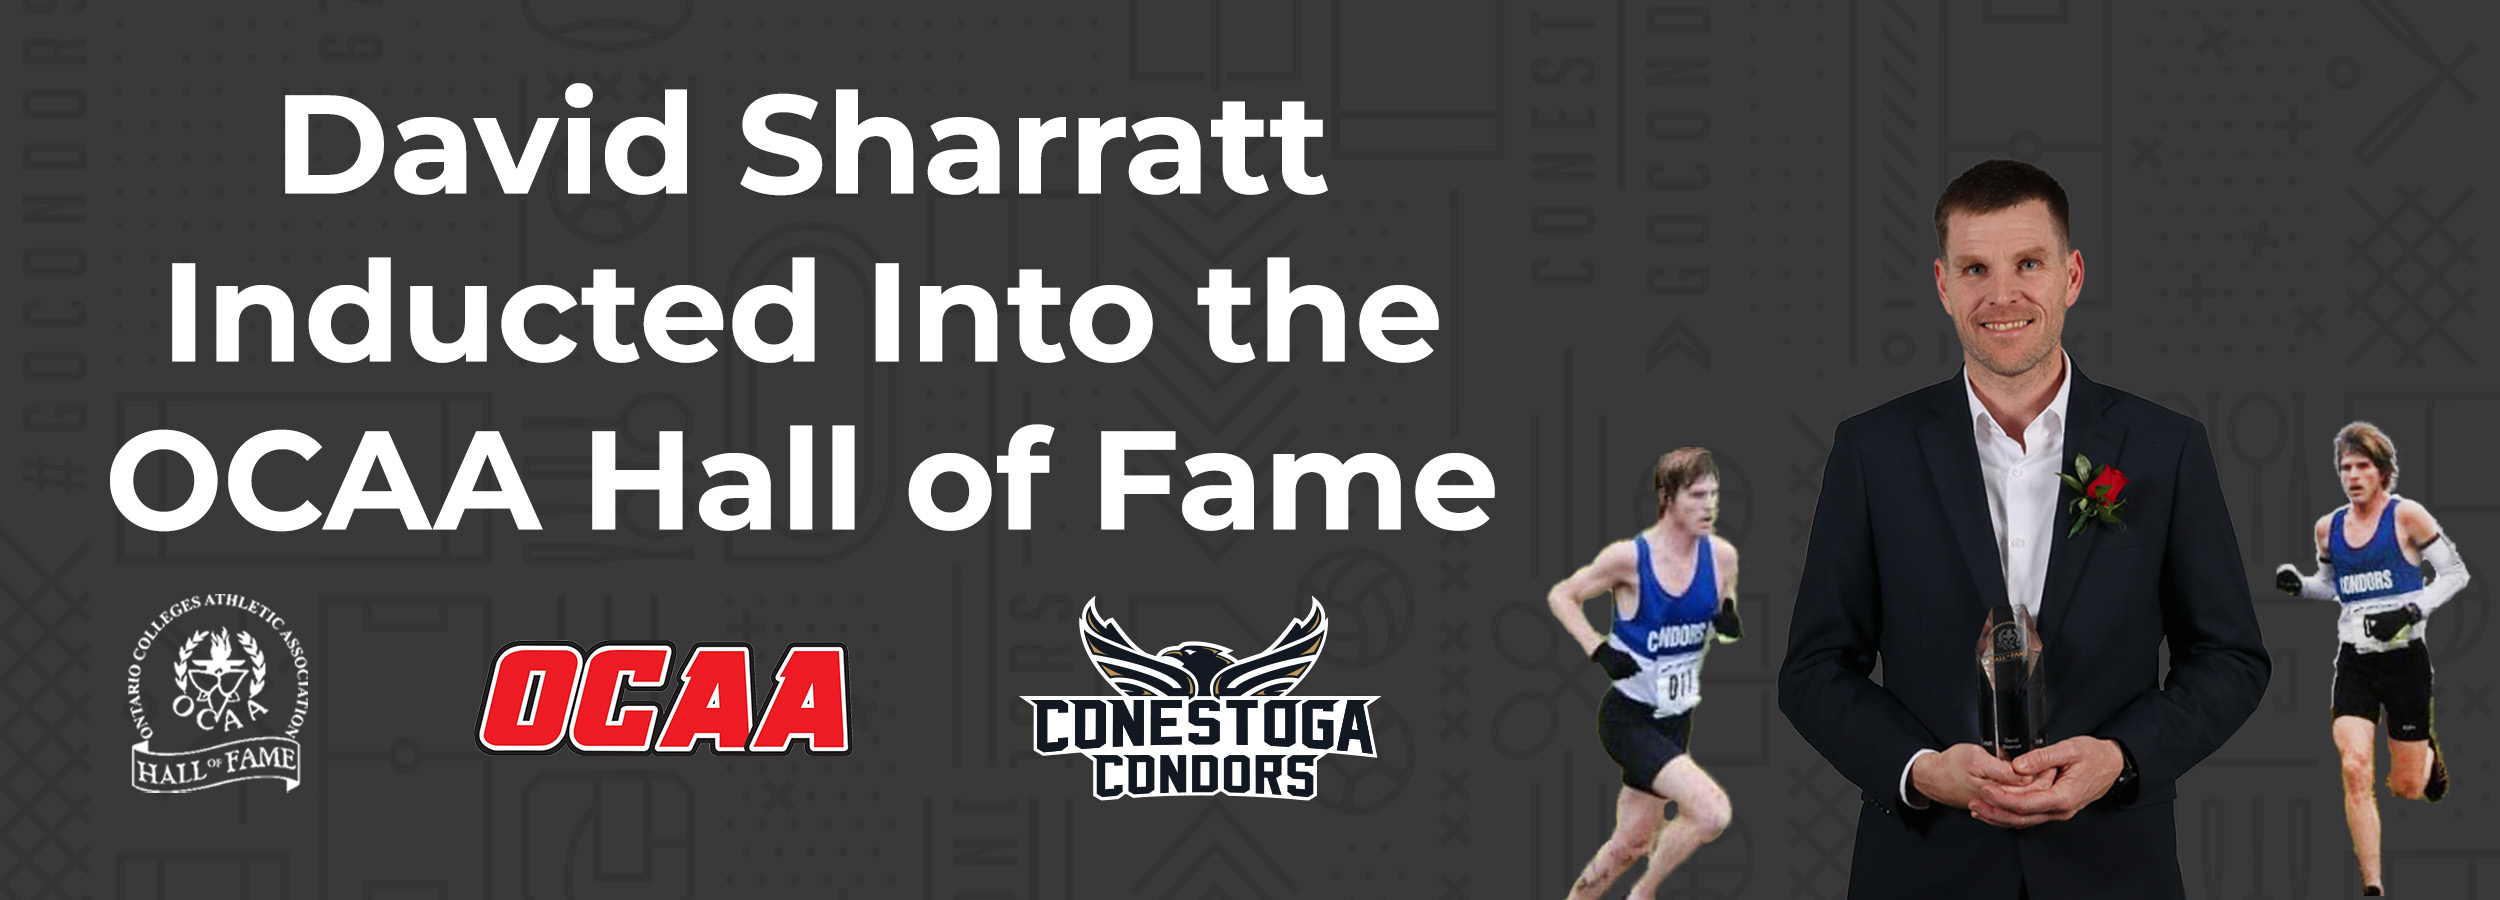 David Sharratt Inducted Into the OCAA Hall of Fame